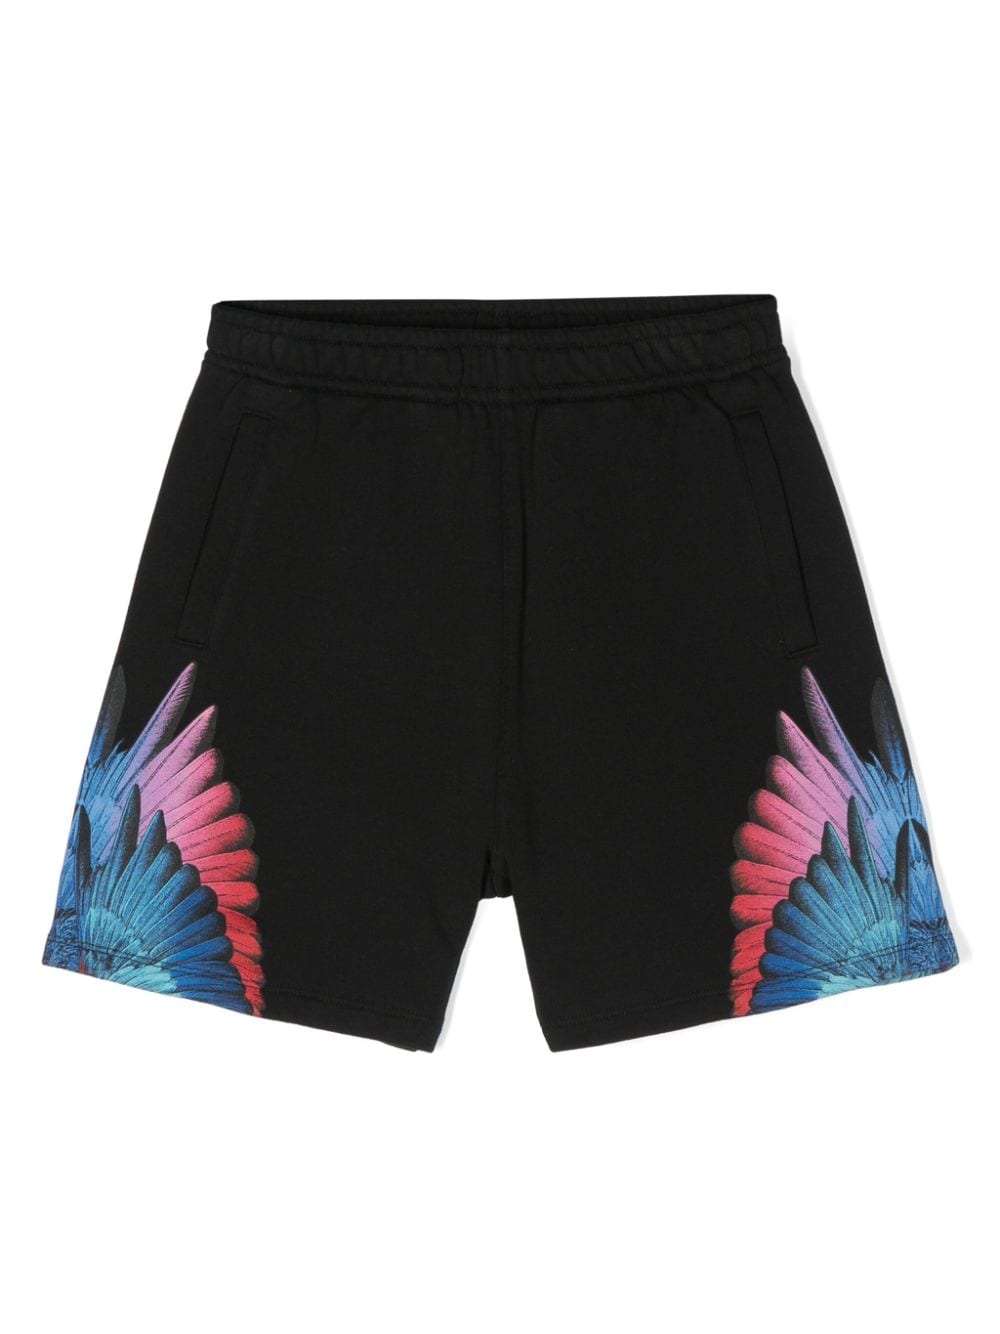 Black Bermuda shorts for boys with print